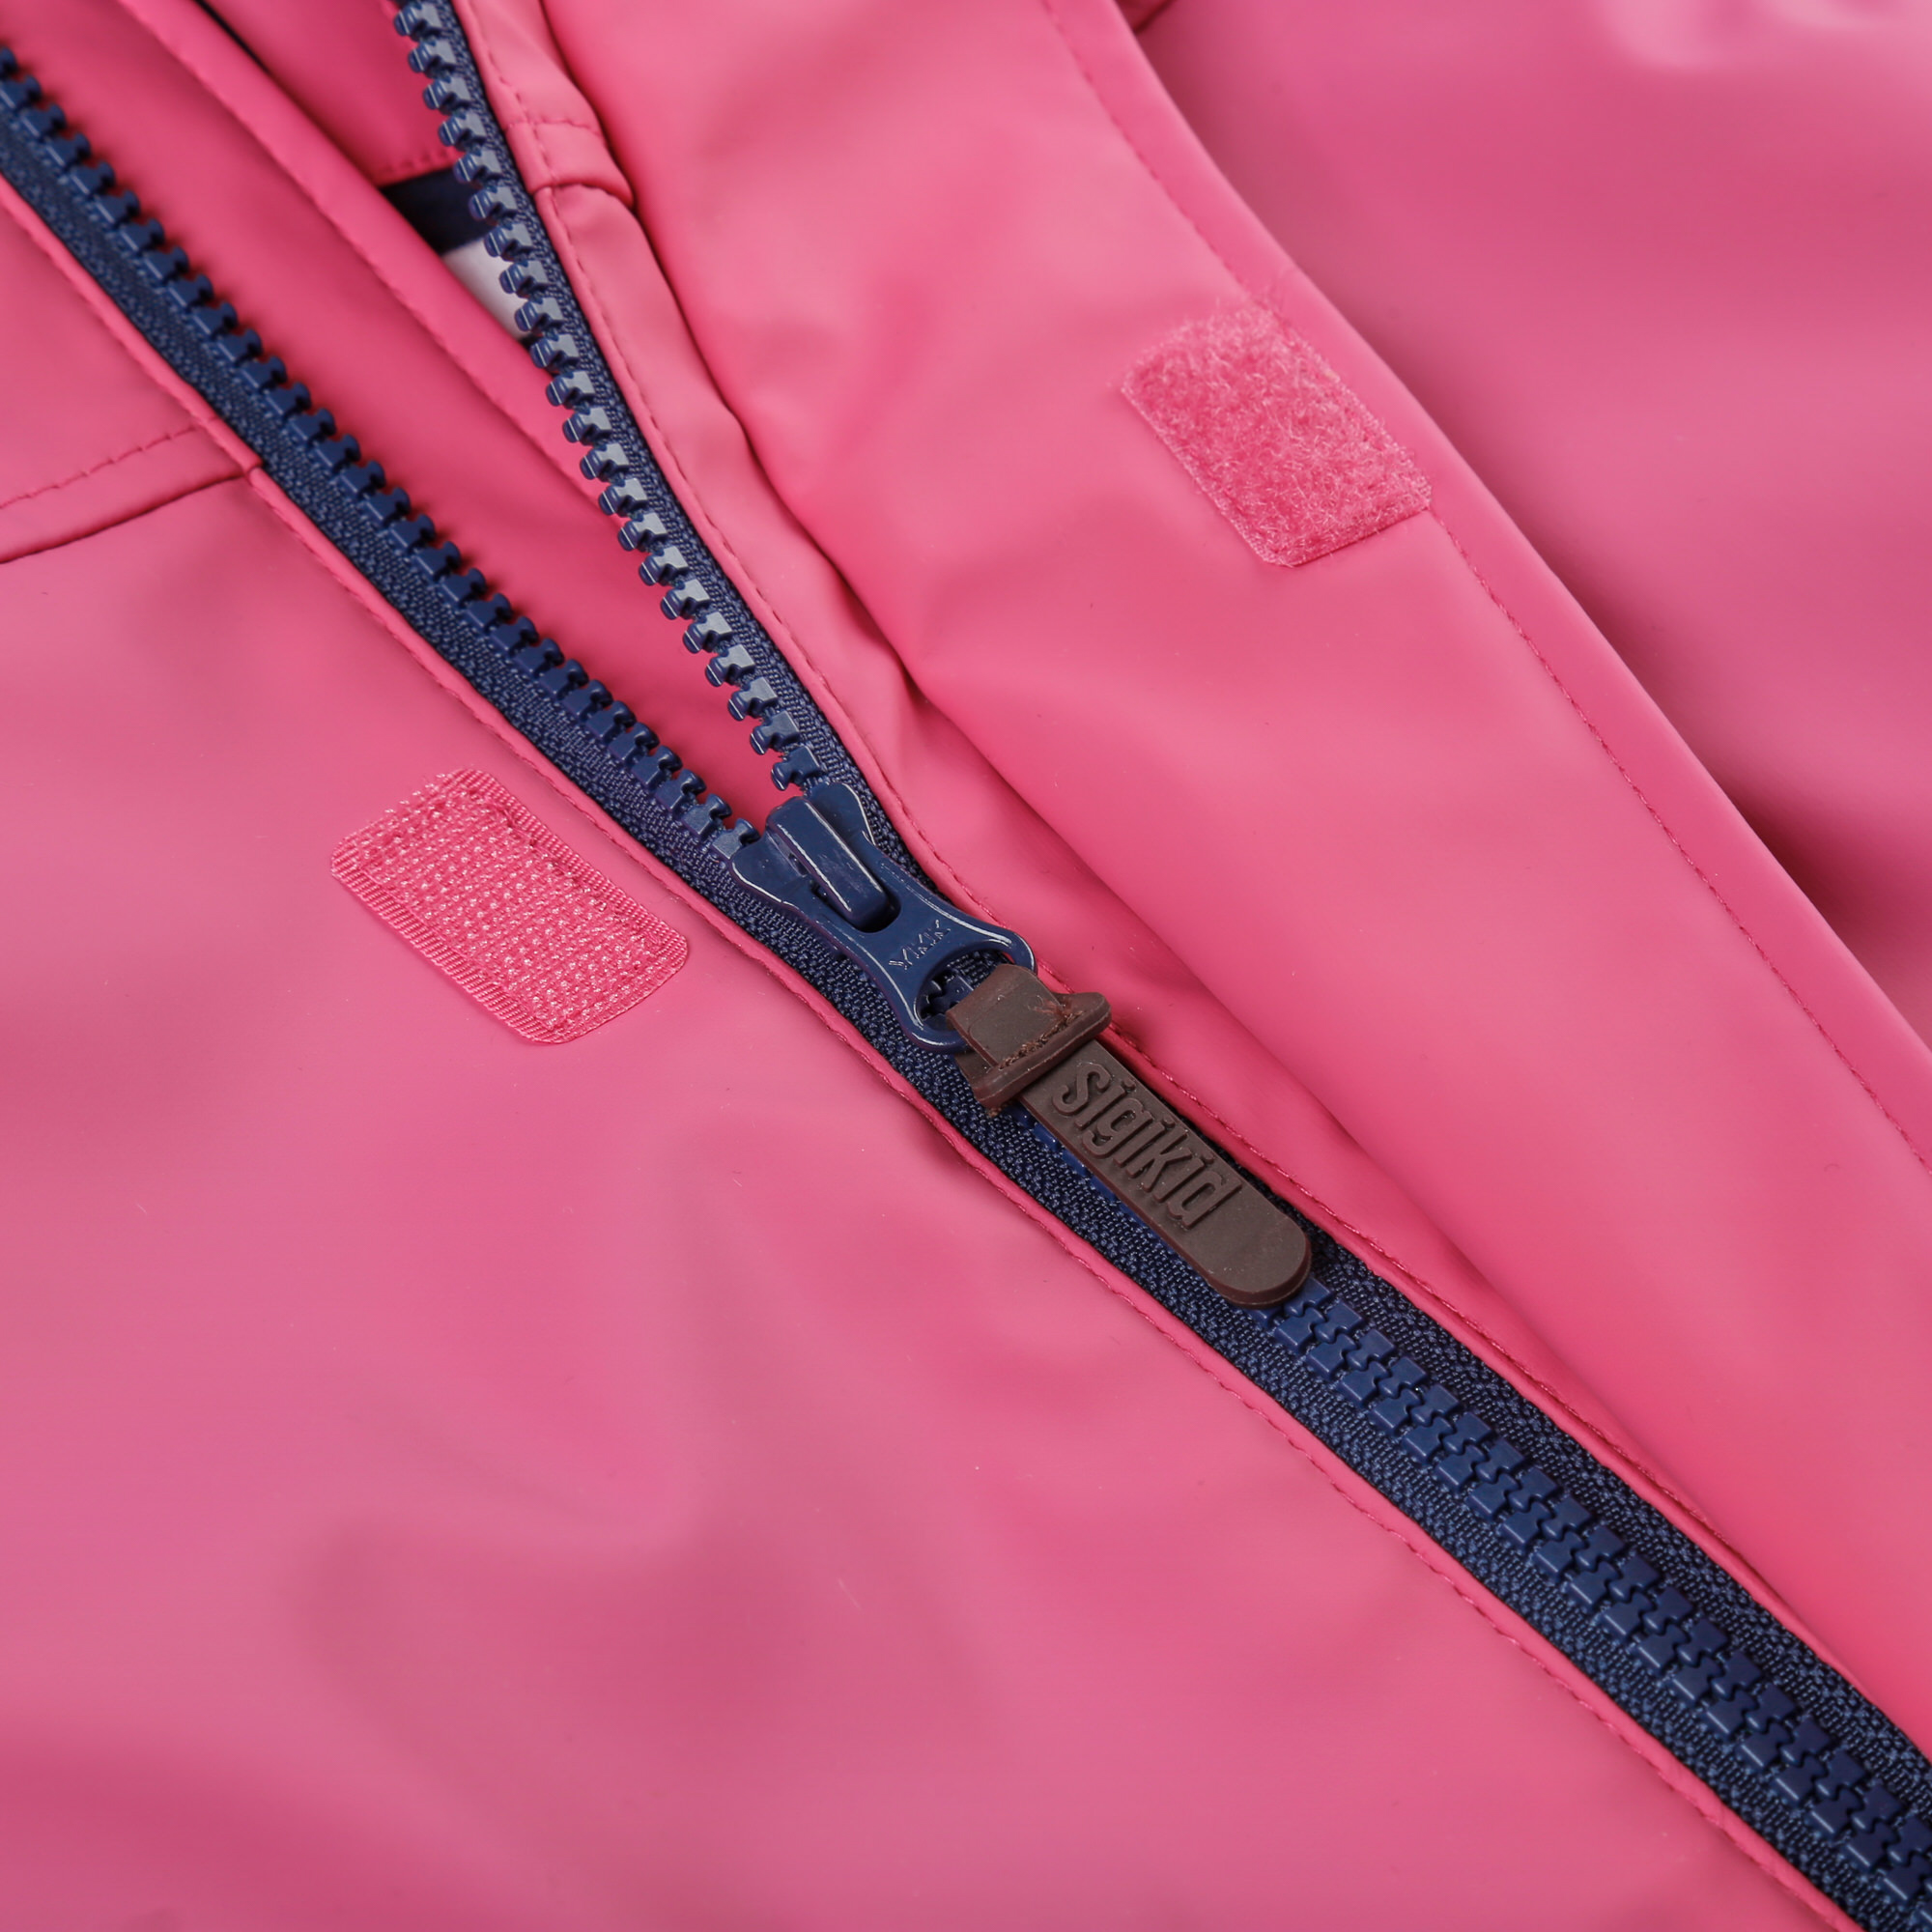 Girls' rain jacket, lined, pink